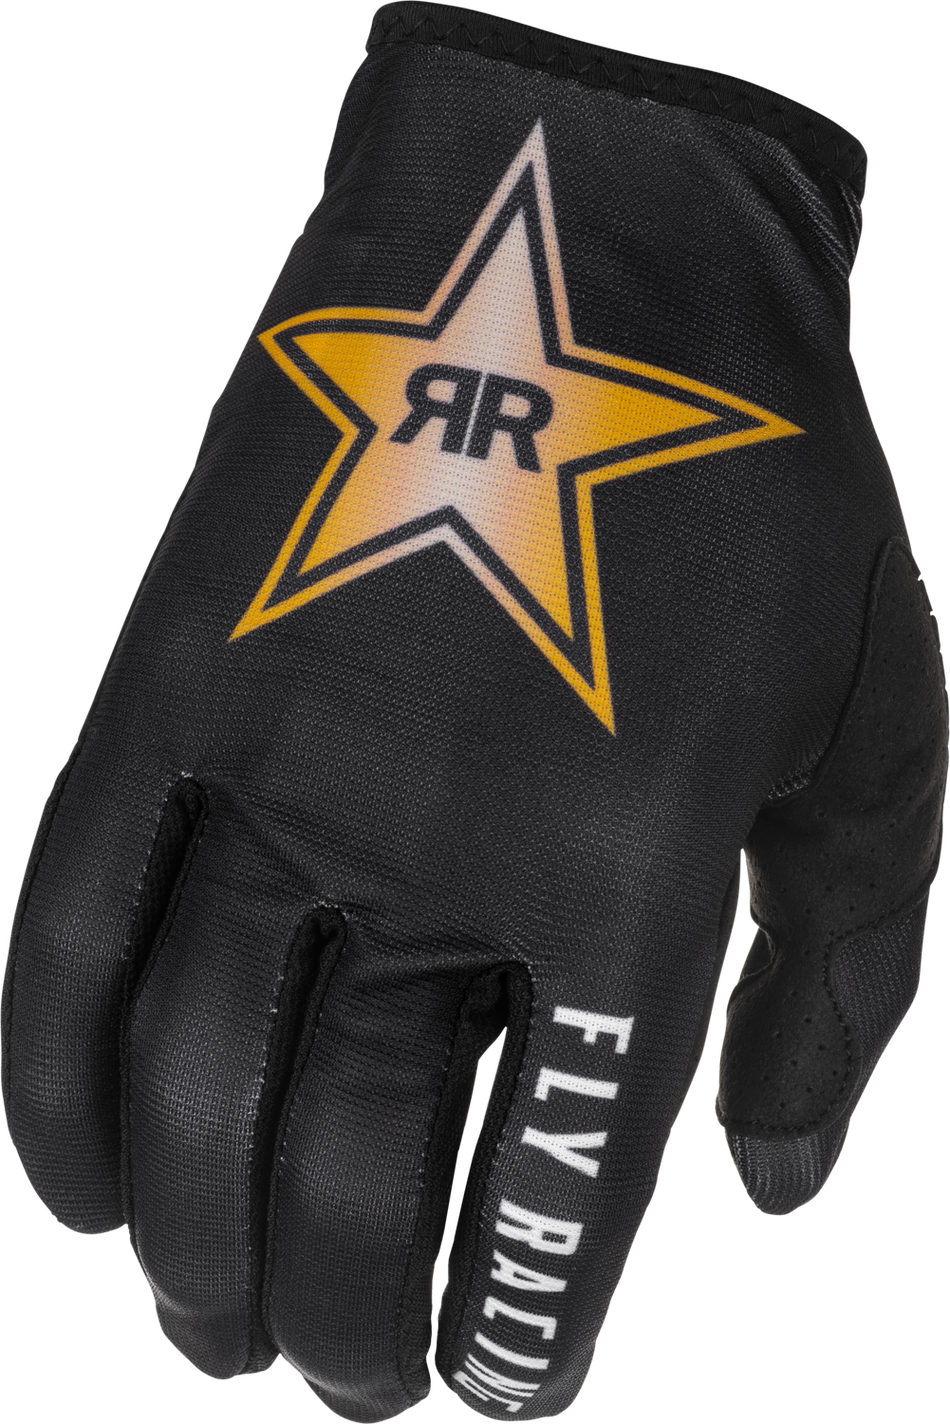 FLY RACING Lite Rockstar Gloves Black/Gold Sm 374-013S